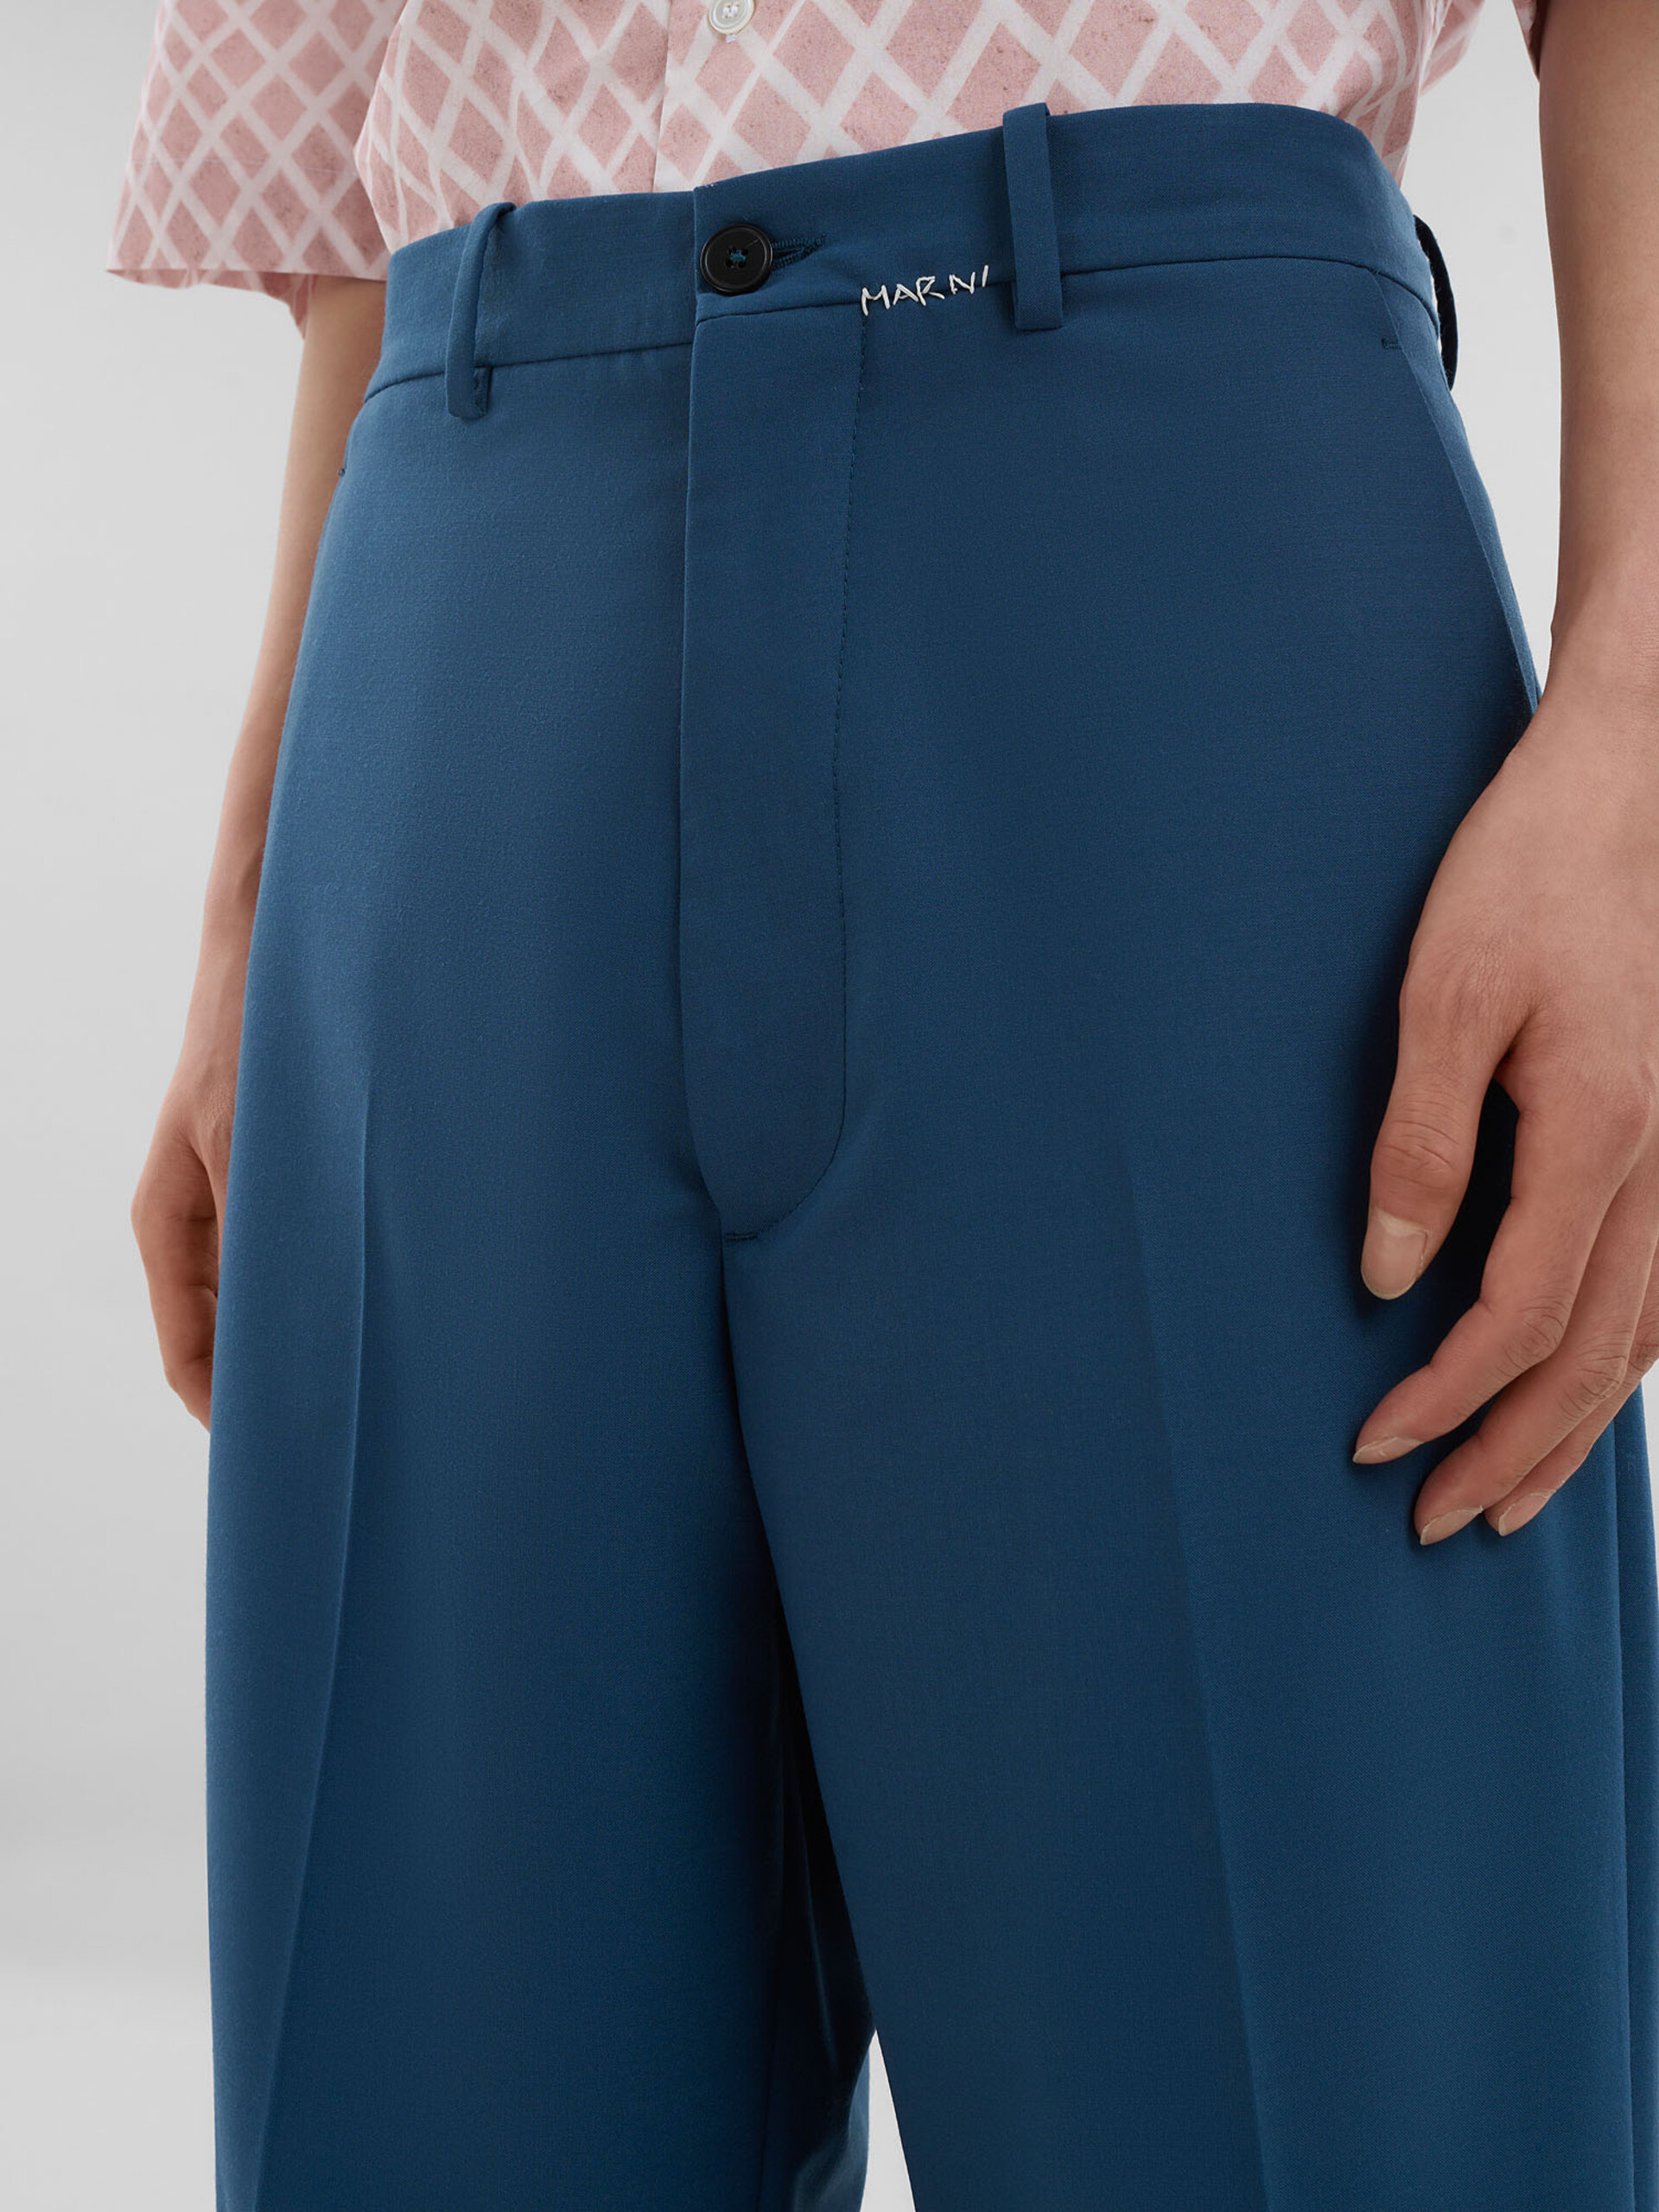 Pantaloni in lana blu con logo rammendo Marni - Pantaloni - Image 4